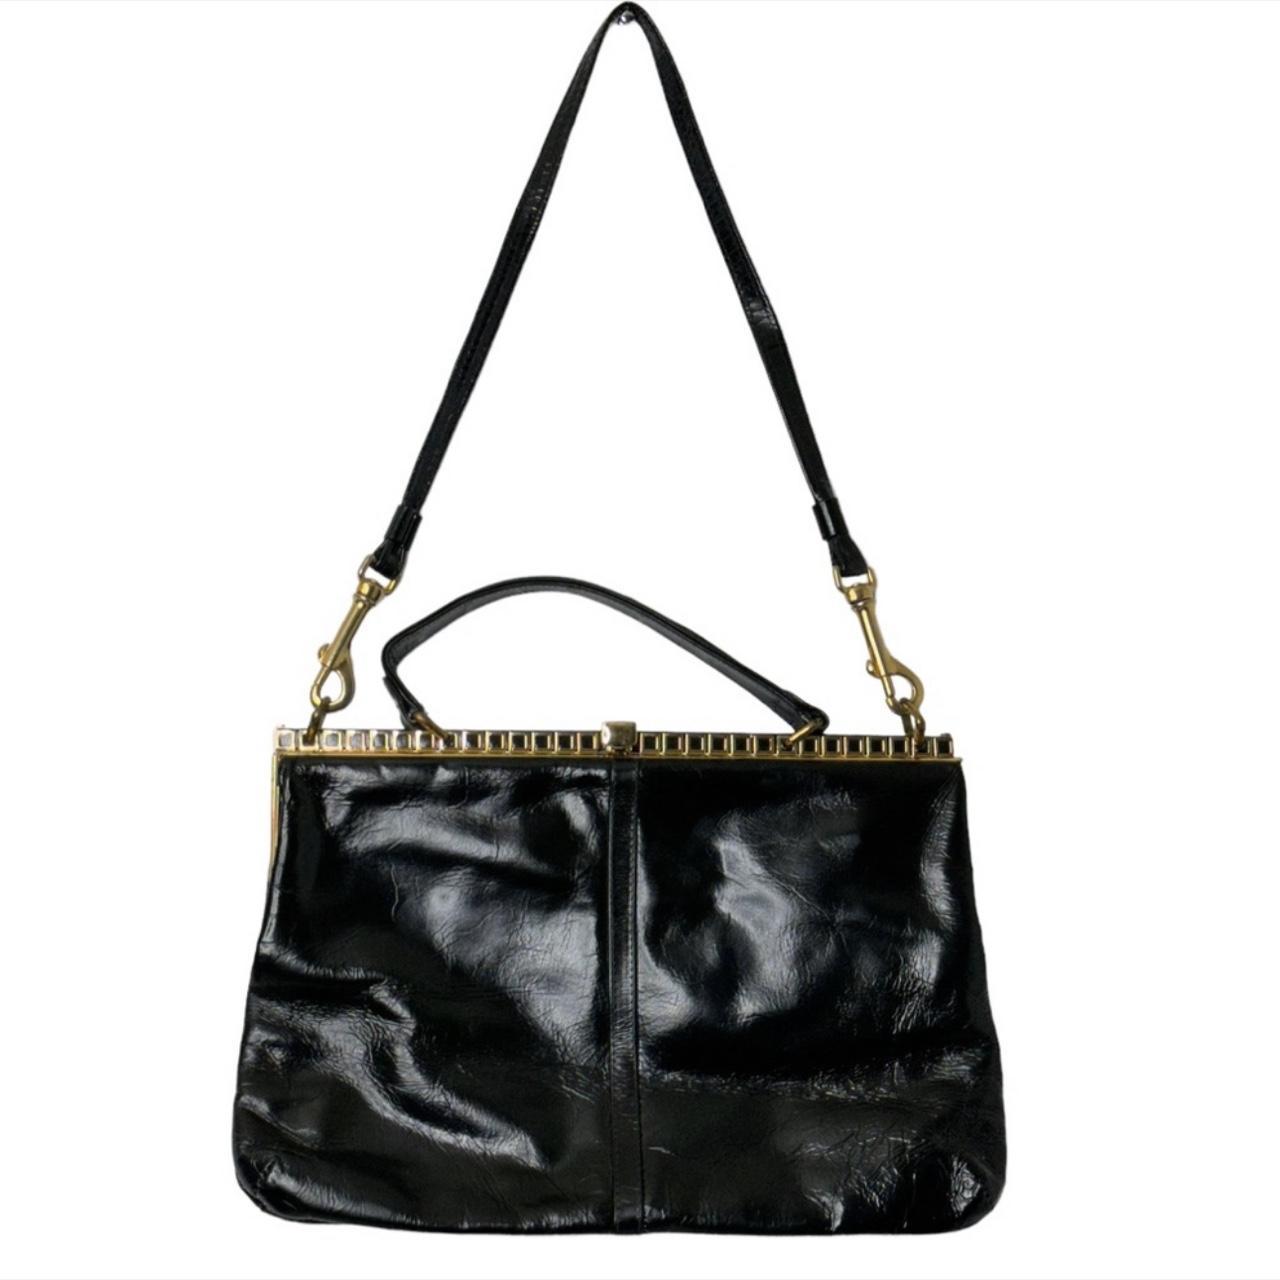 Jane Shilton branded leather handbag - «VIOLITY»